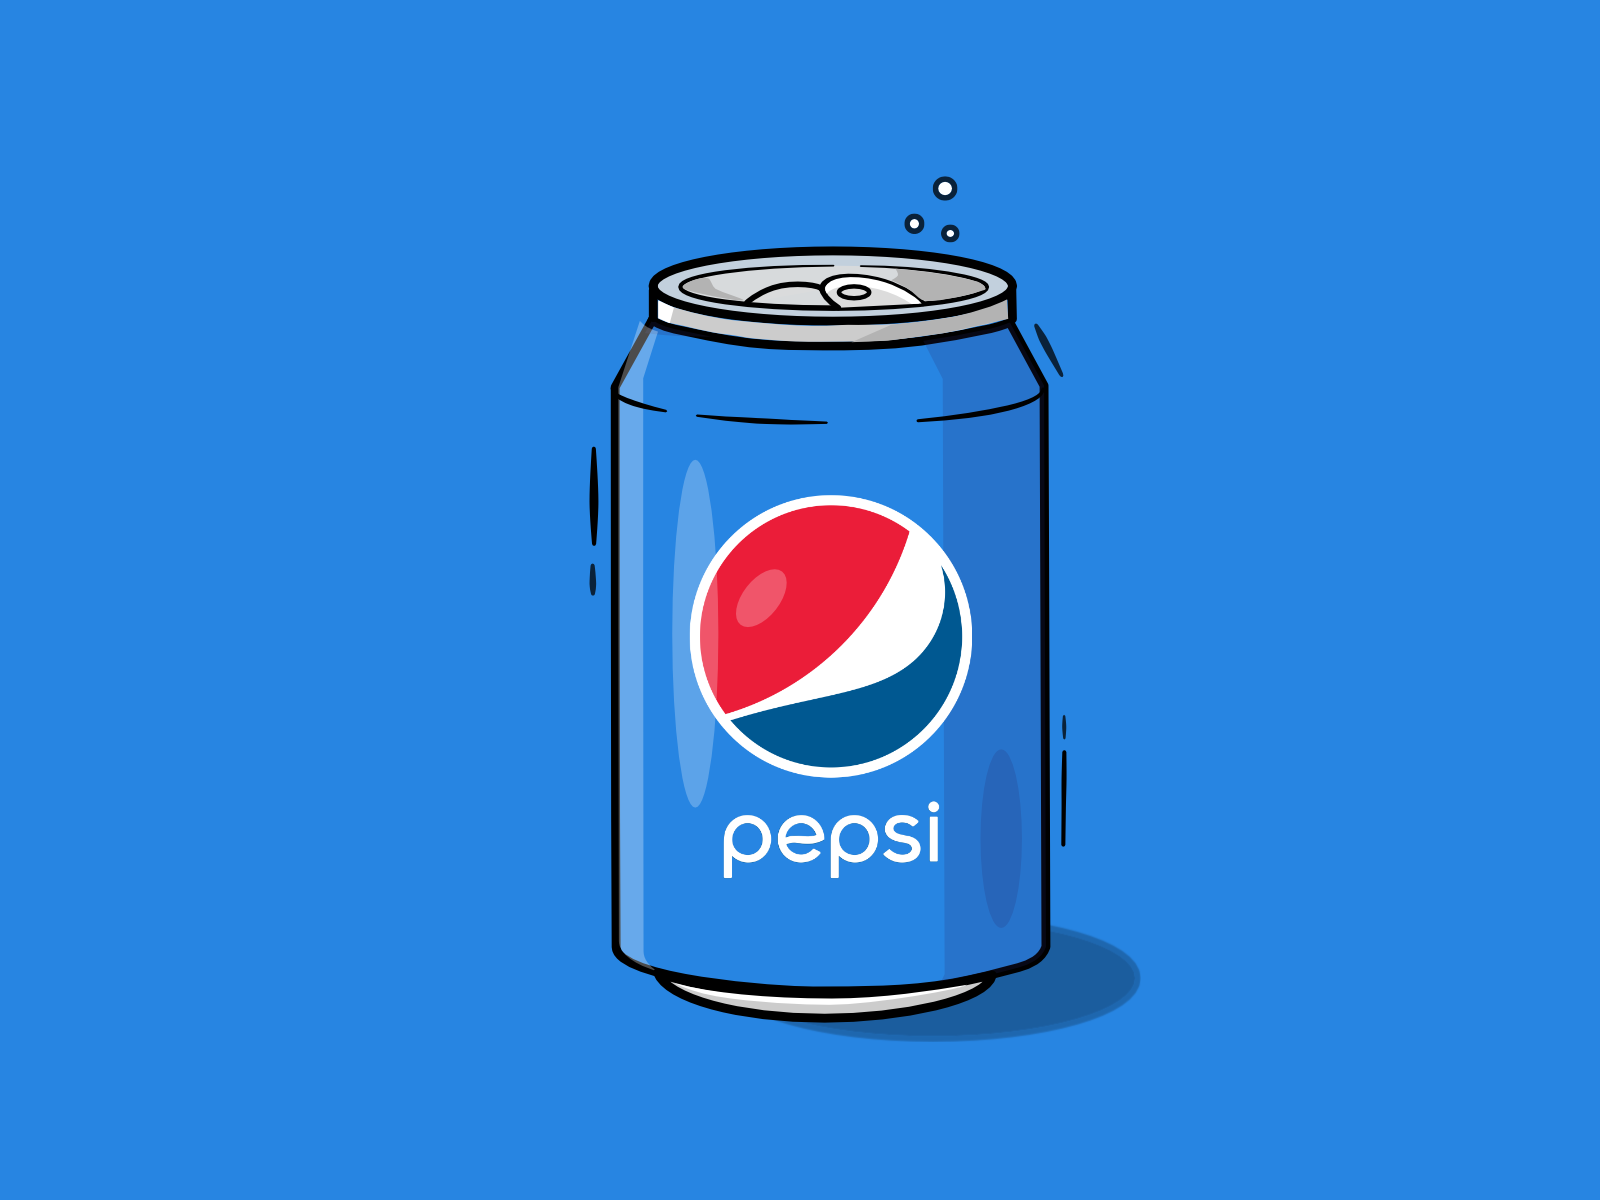 Pepsi Soda Can by Tharun bathula on Dribbble